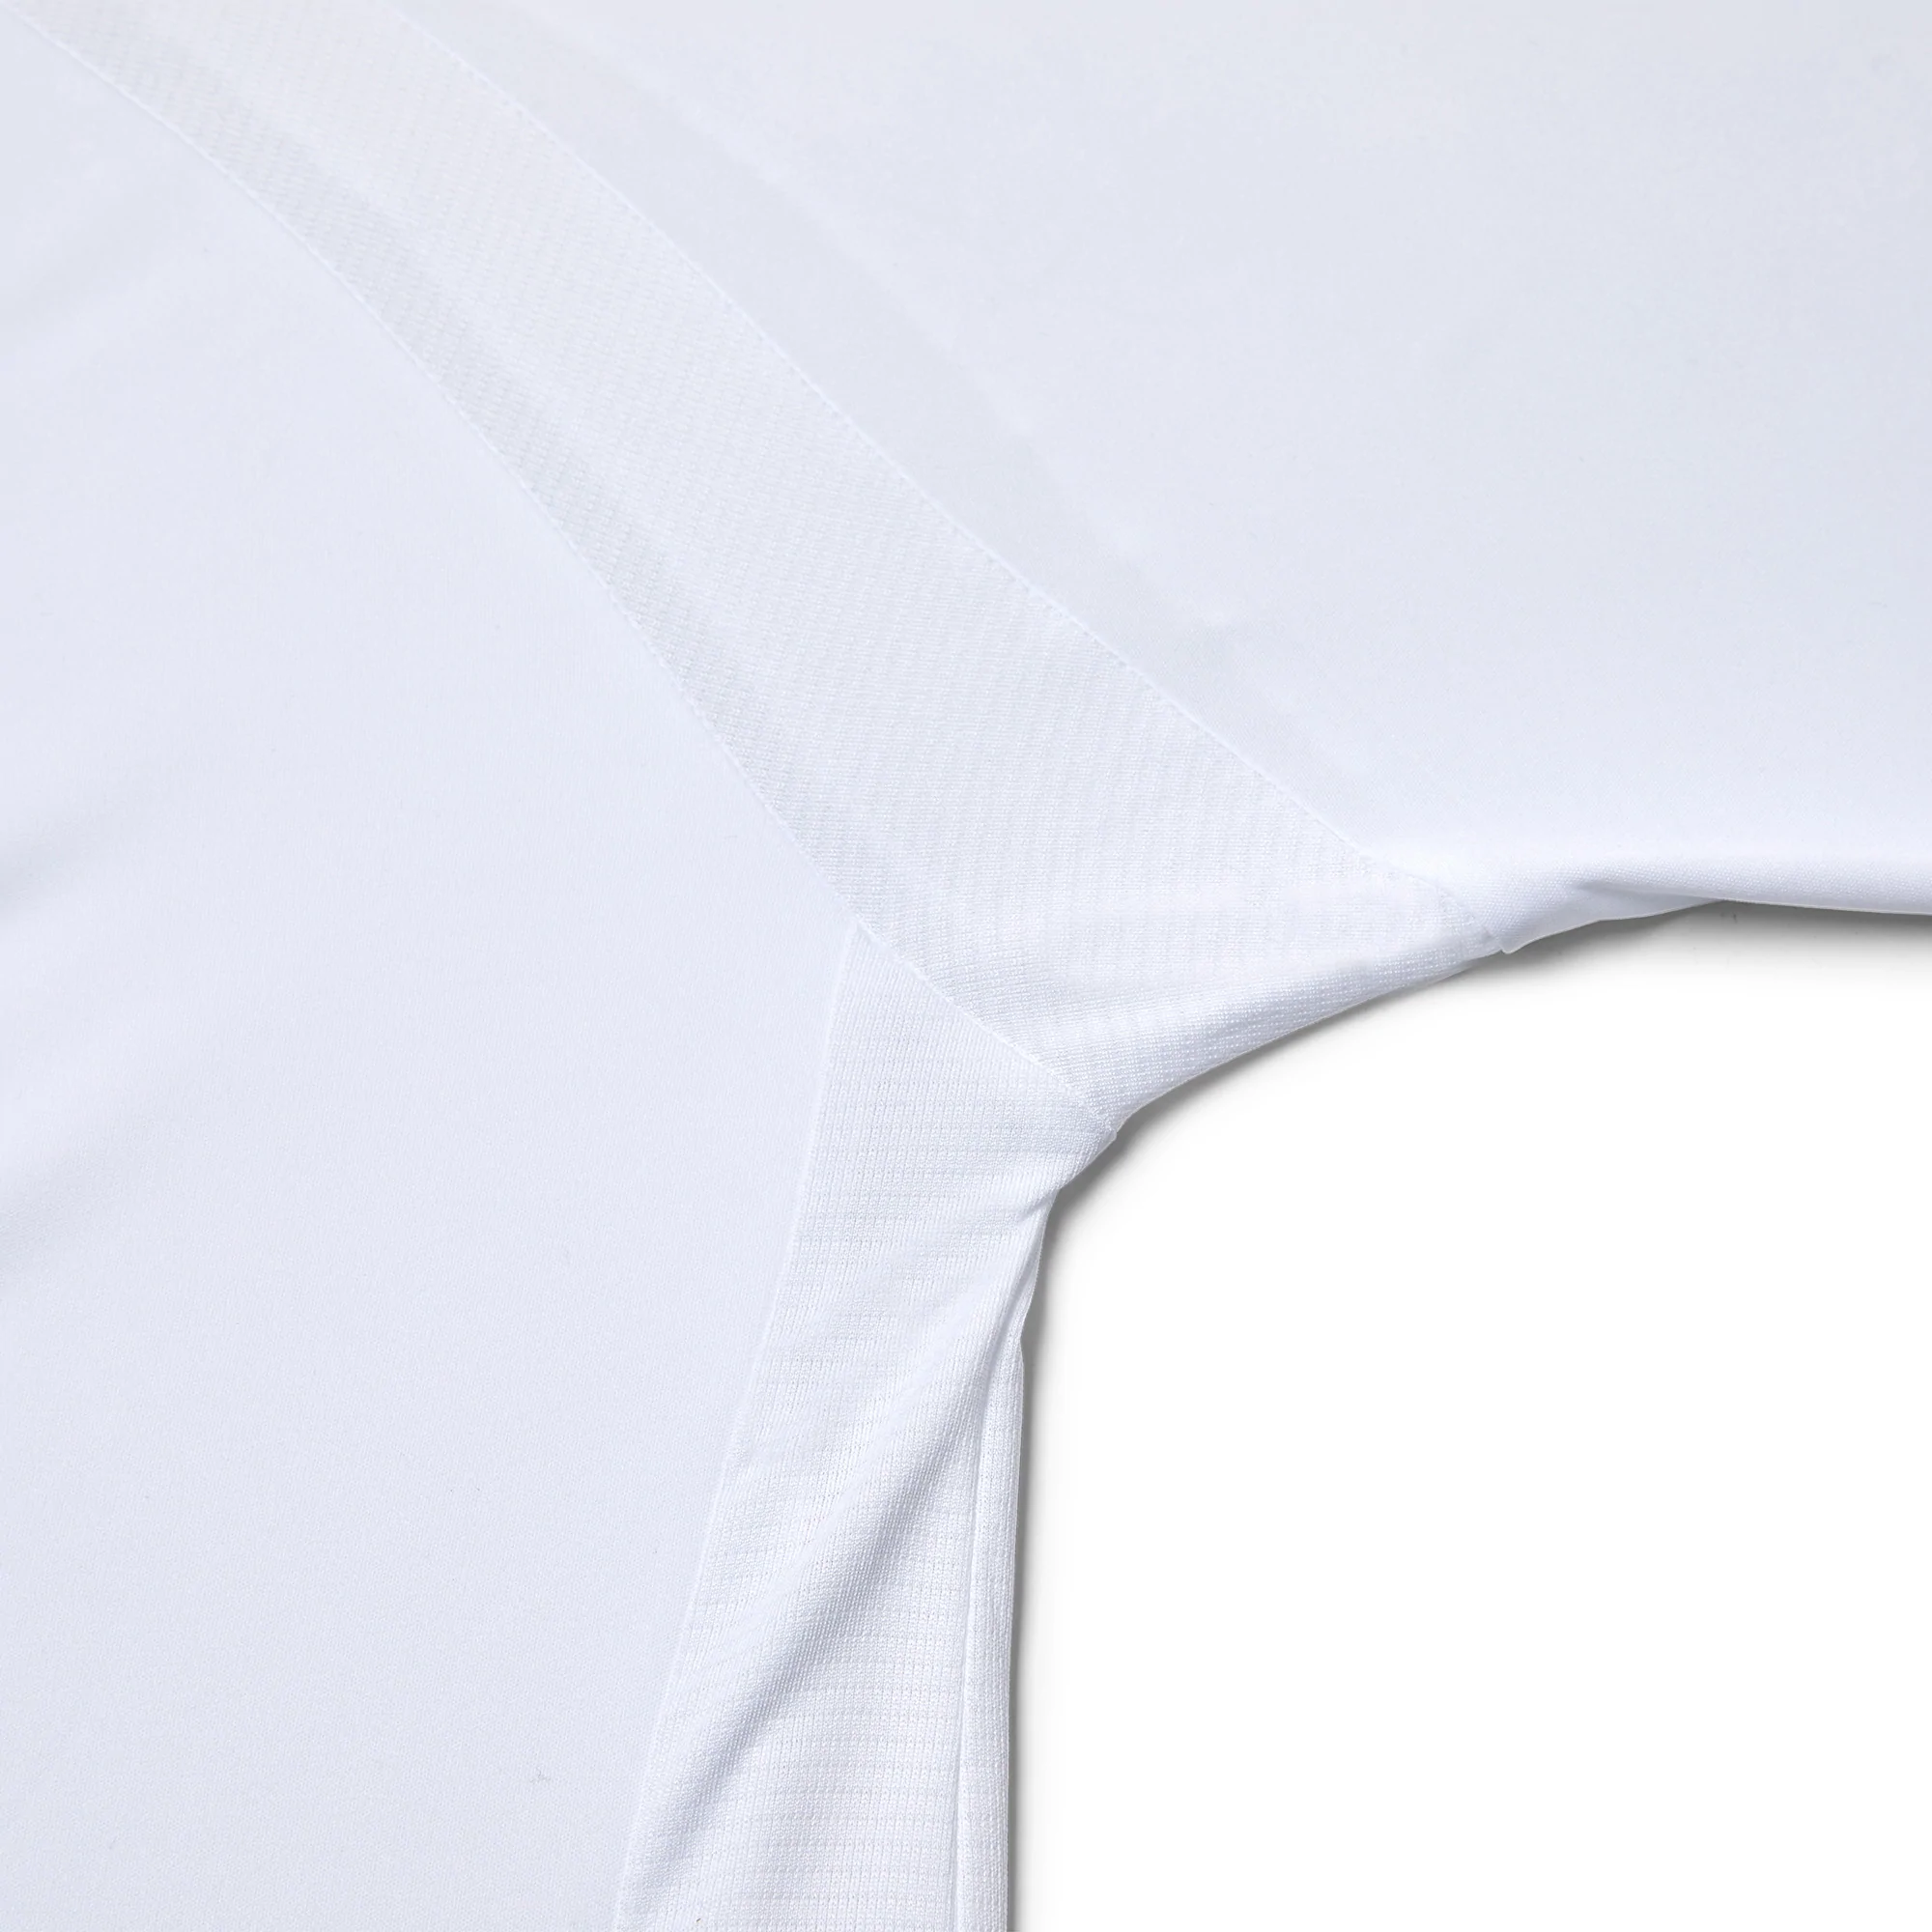 Тениска с дълъг ръкав и качулка UPF 50+ PELAGIC VAPORTEK SIDELINE DORADO PUERTO RICO LONG SLEEVE HOODED PERFORMANCE SHIRT White